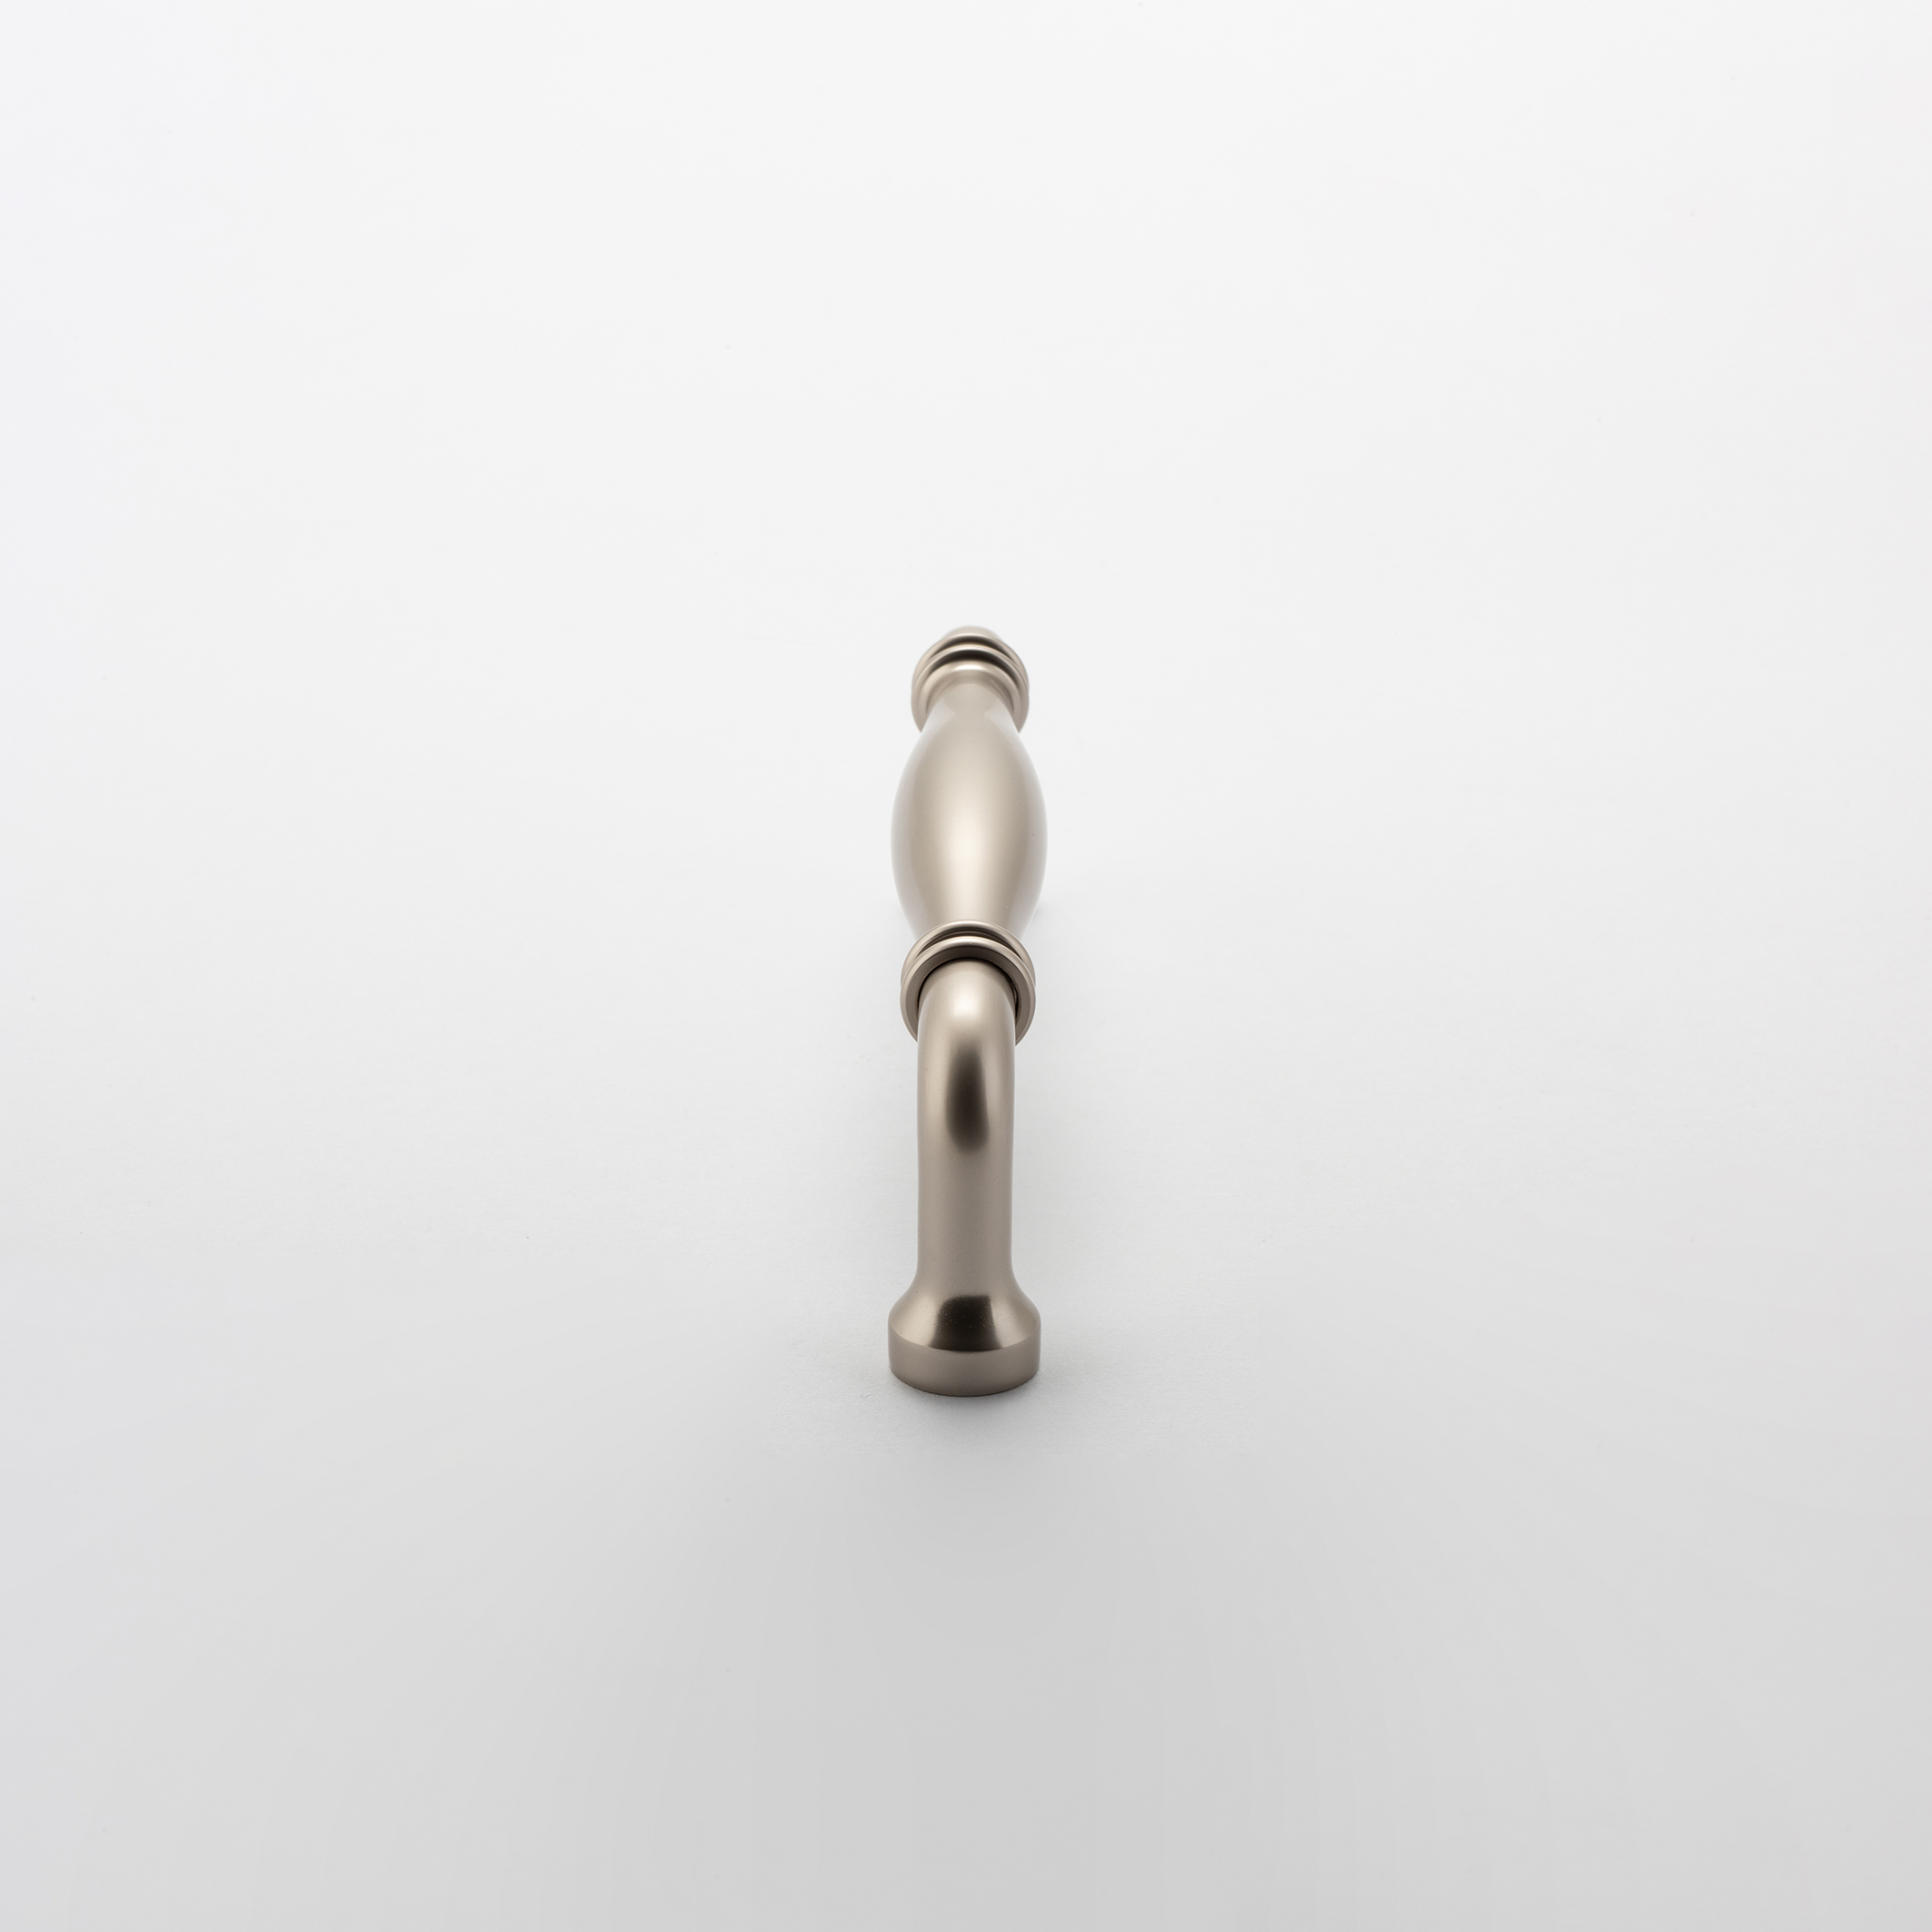 21099 - Sarlat Cabinet Pull - CTC320mm - Satin Nickel